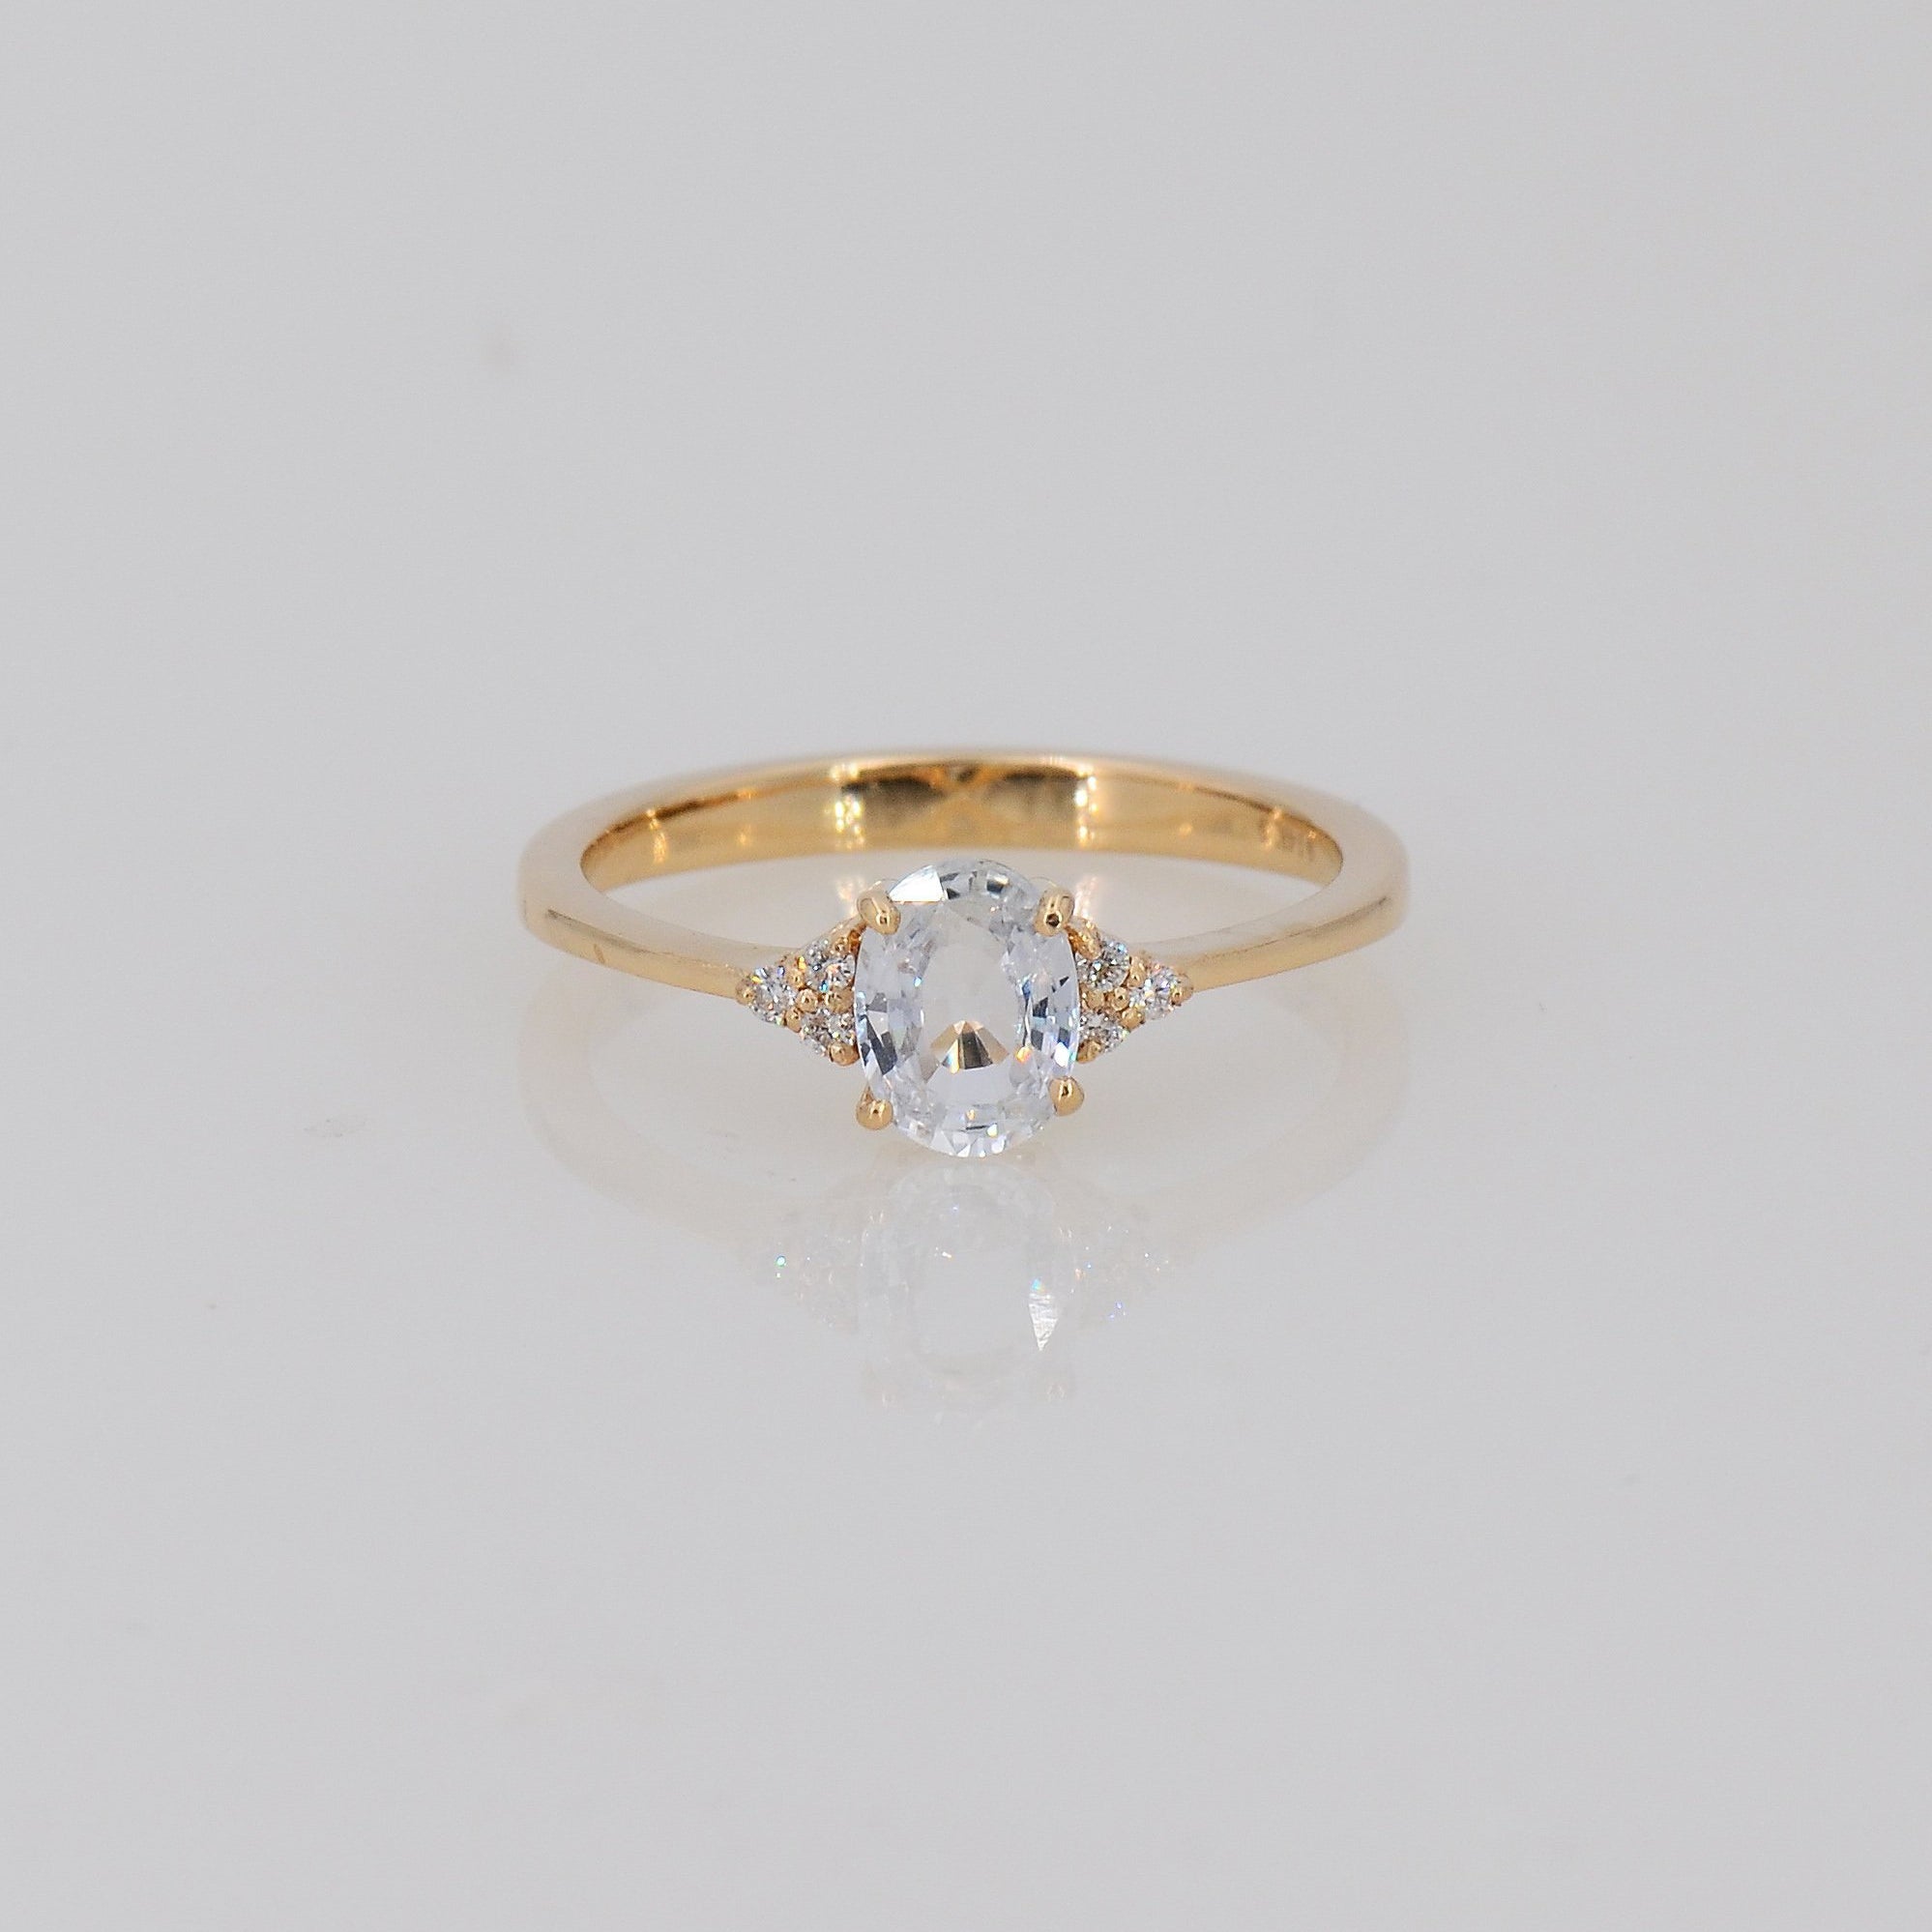 White Sapphire Ring, Genuine Gemstone ring